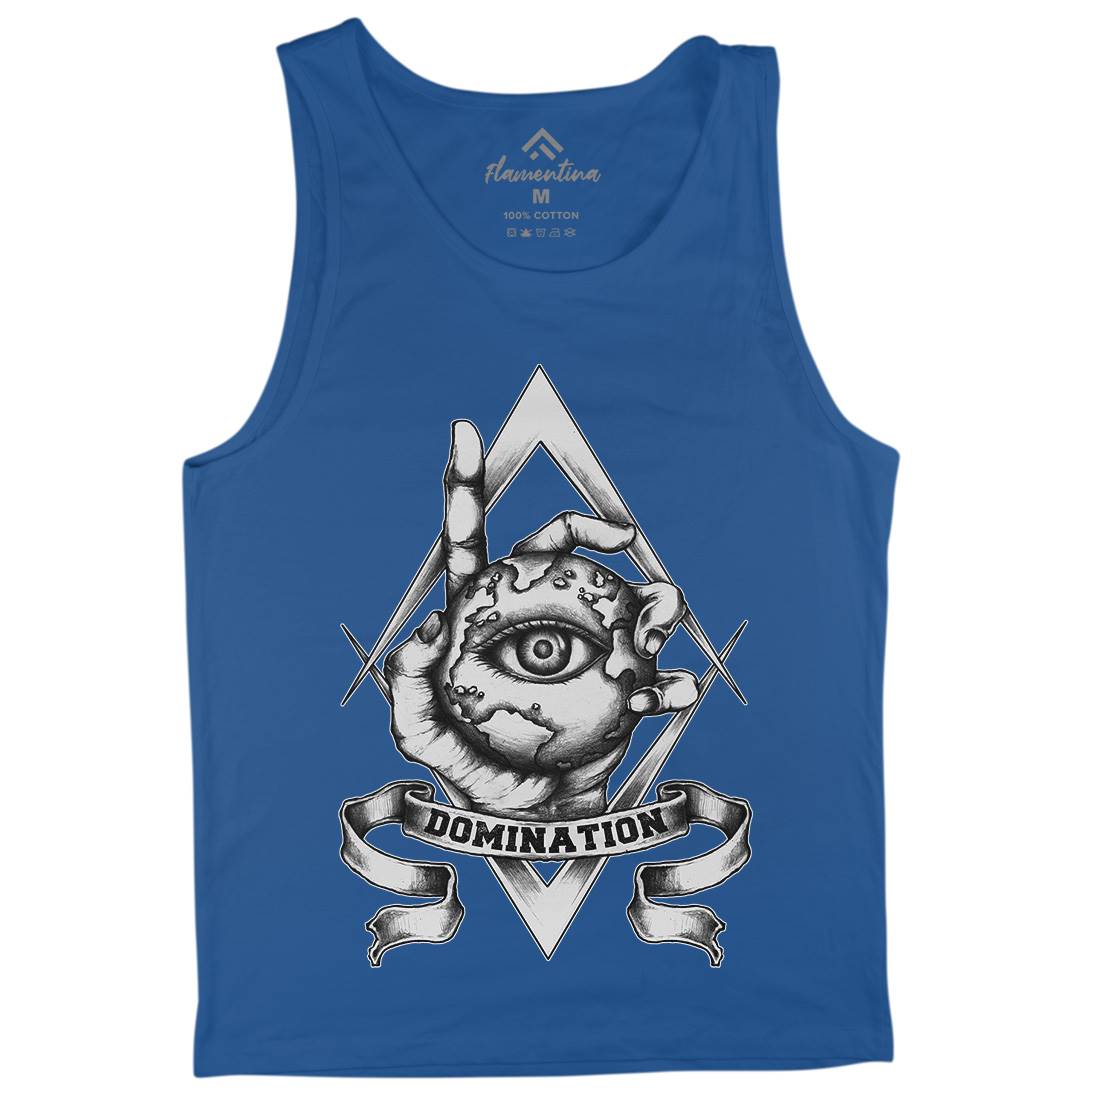 Domination Mens Tank Top Vest Illuminati A418